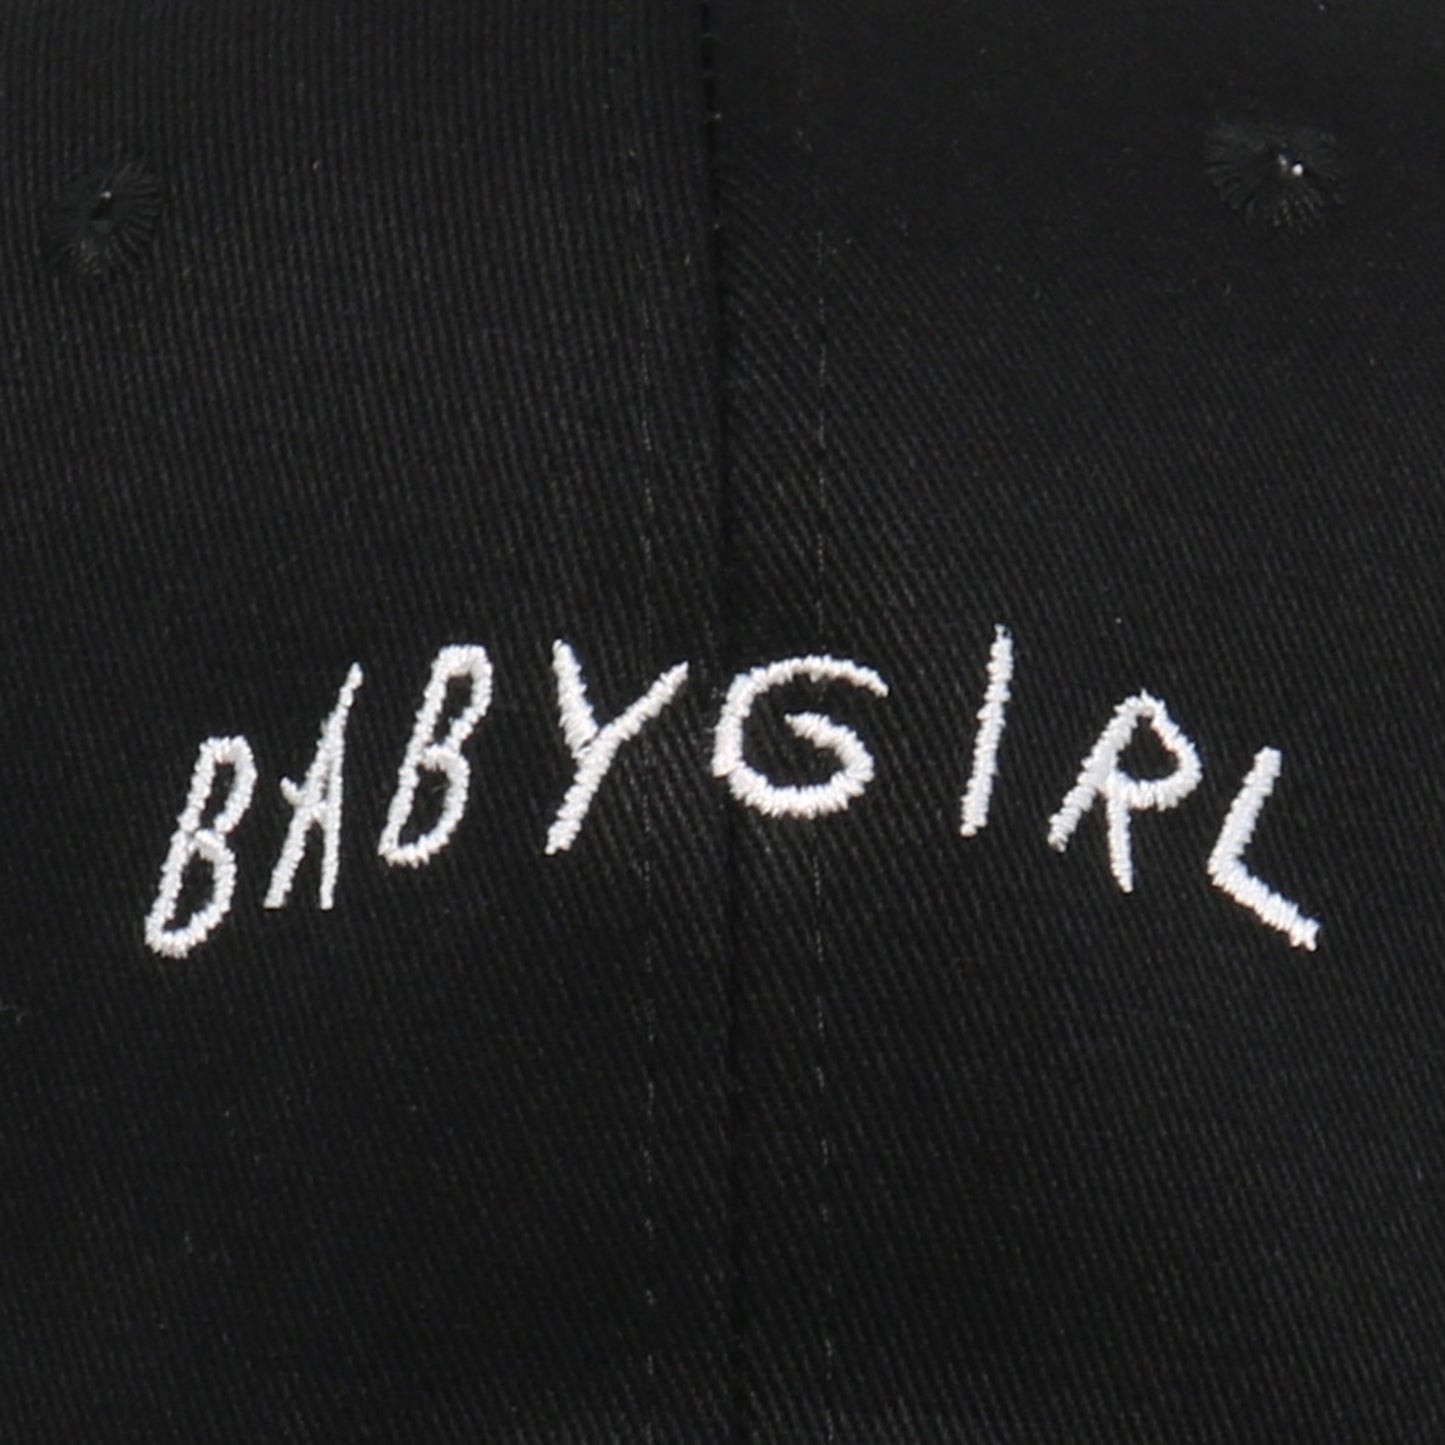 BABYGIRL Embroidered Baseball Cap